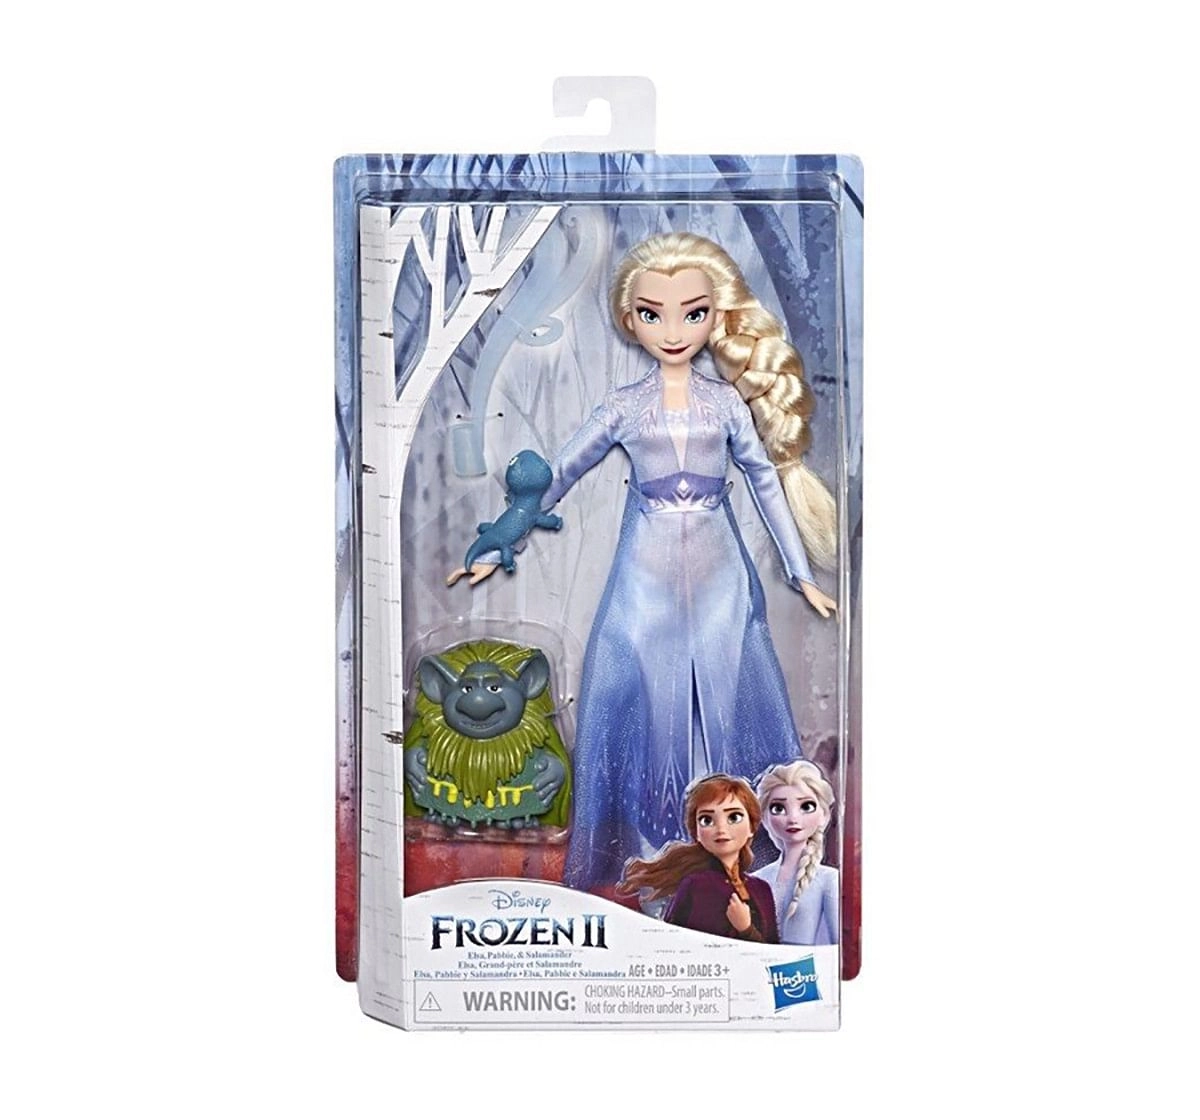 Disney Frozen 2 Storytelling Fashion Doll Assorted Dolls & Accessories for Girls age 3Y+ 